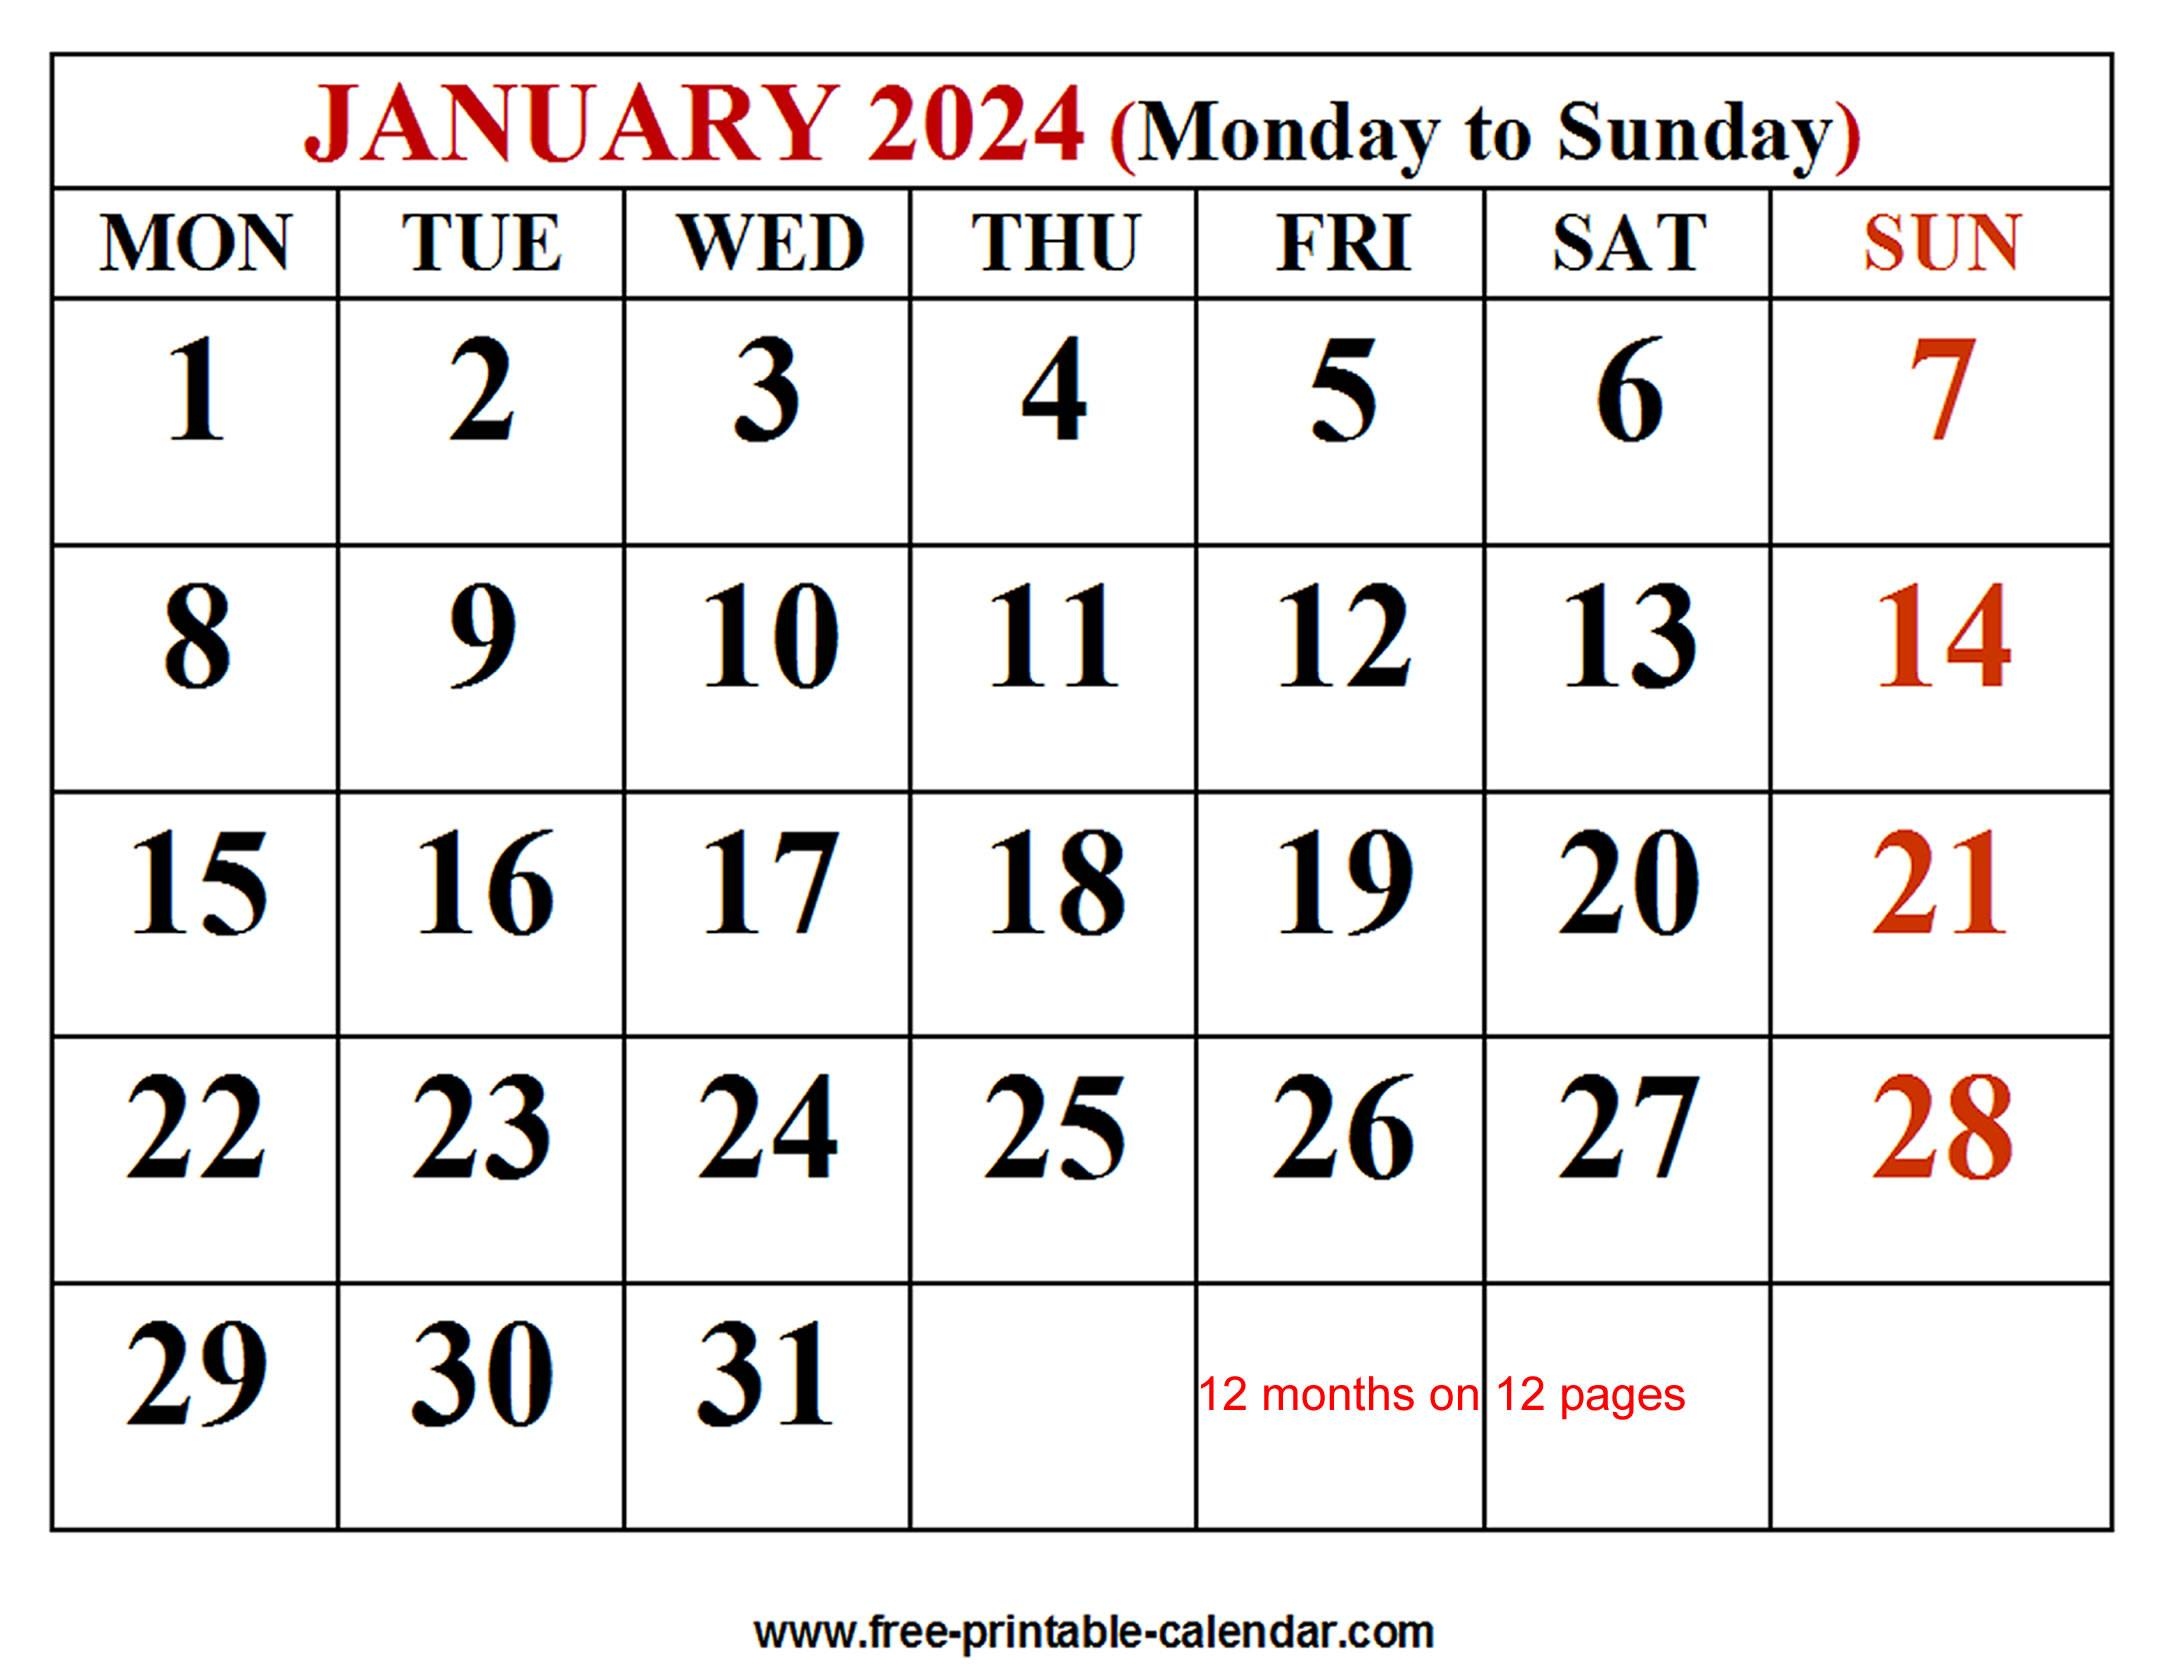 2024 Calendar Template - Free-Printable-Calendar intended for Free Printable Calendar 2024 20